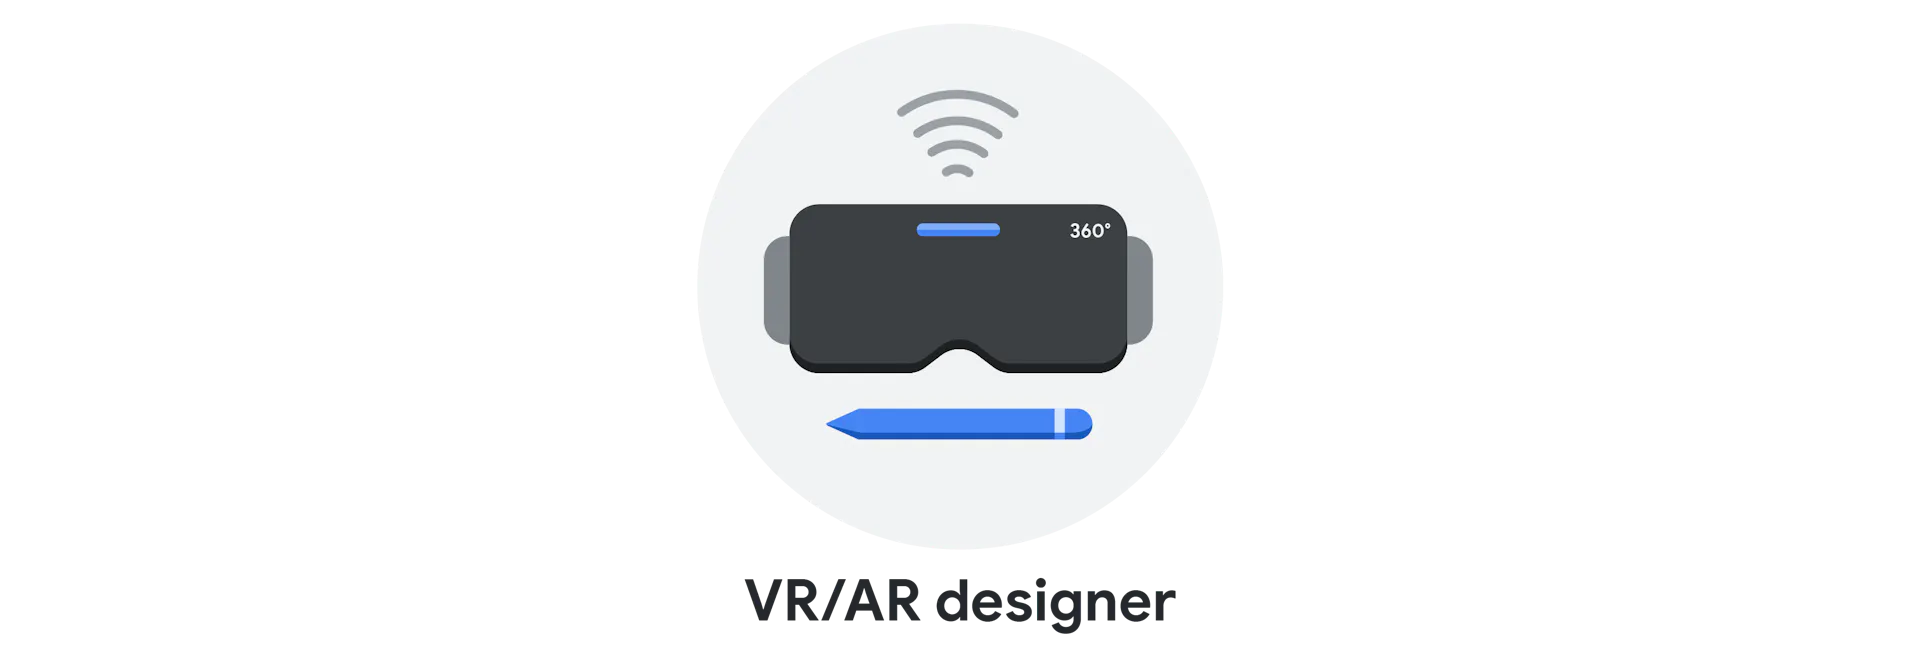 VR/AR designer